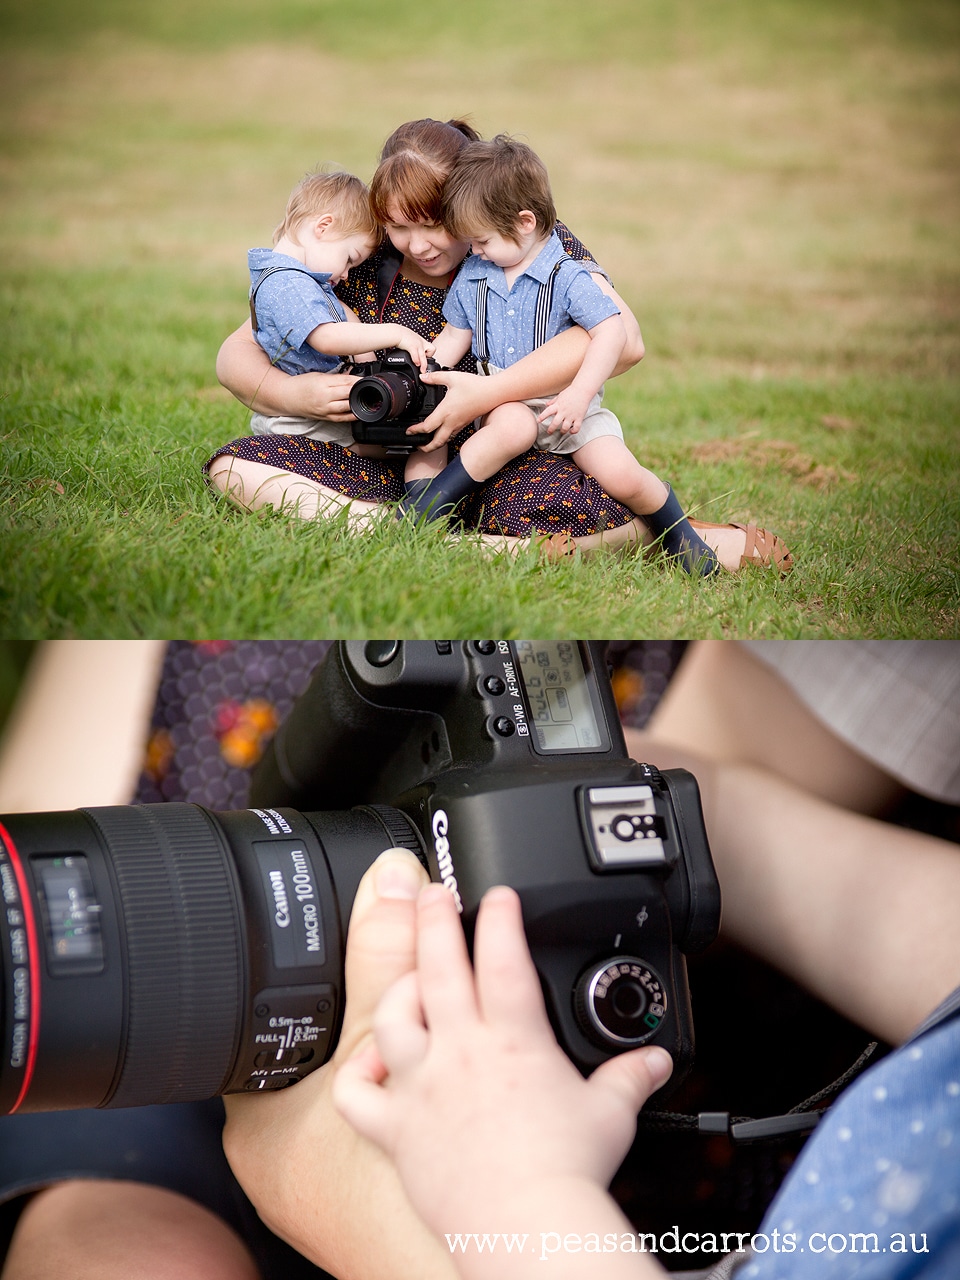 Brisbane Baby, Children & Family Portrait Photography ~ Peas & Carrots Photography.  Award winning children